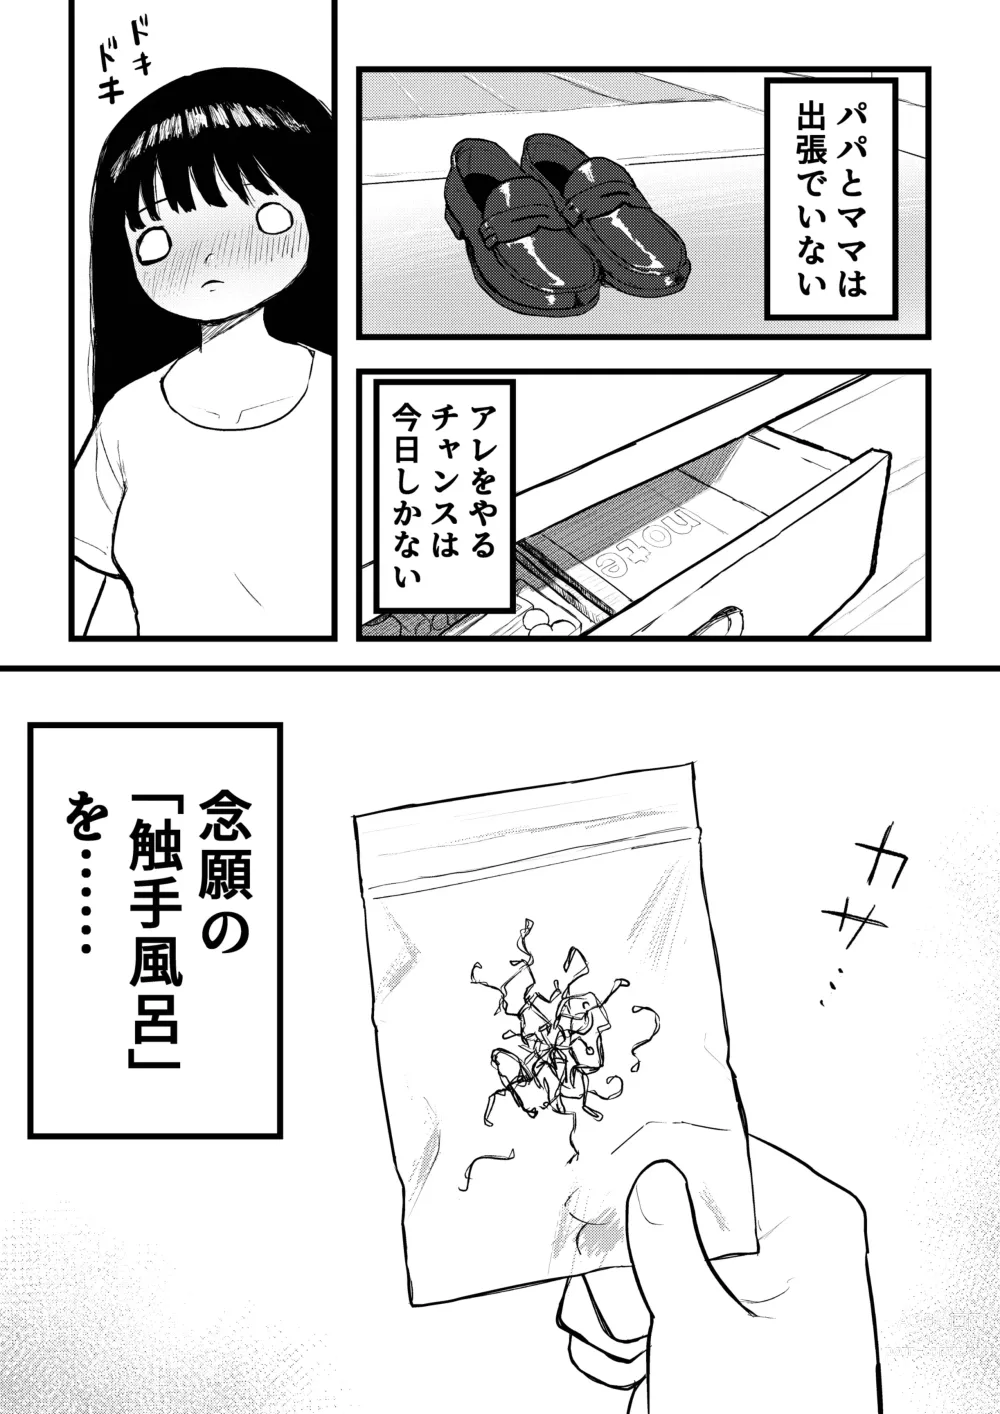 Page 1 of doujinshi Tentacle bath